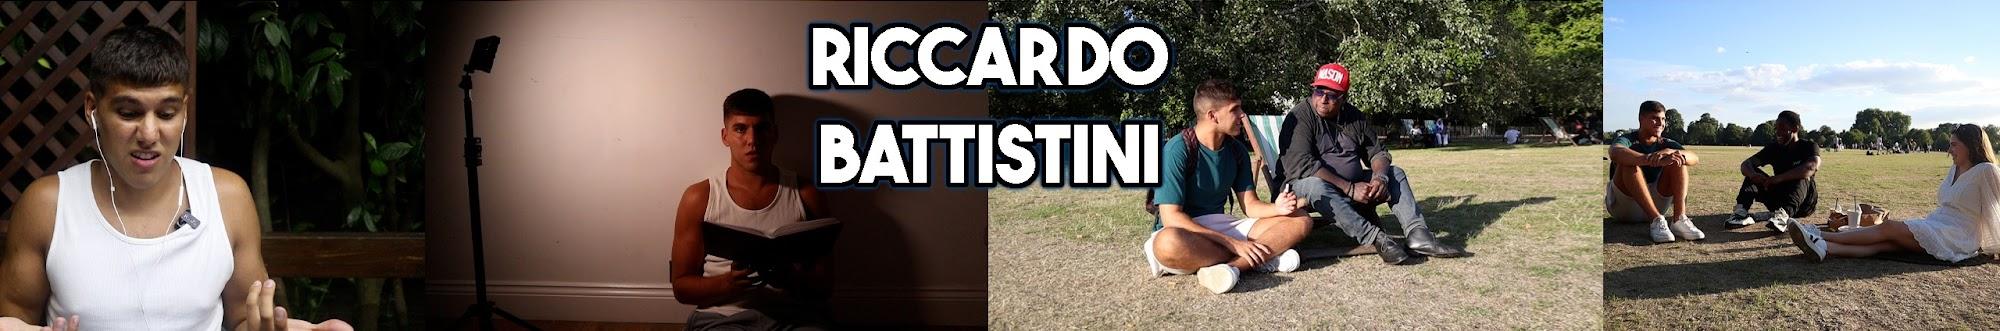 Riccardo Battistini